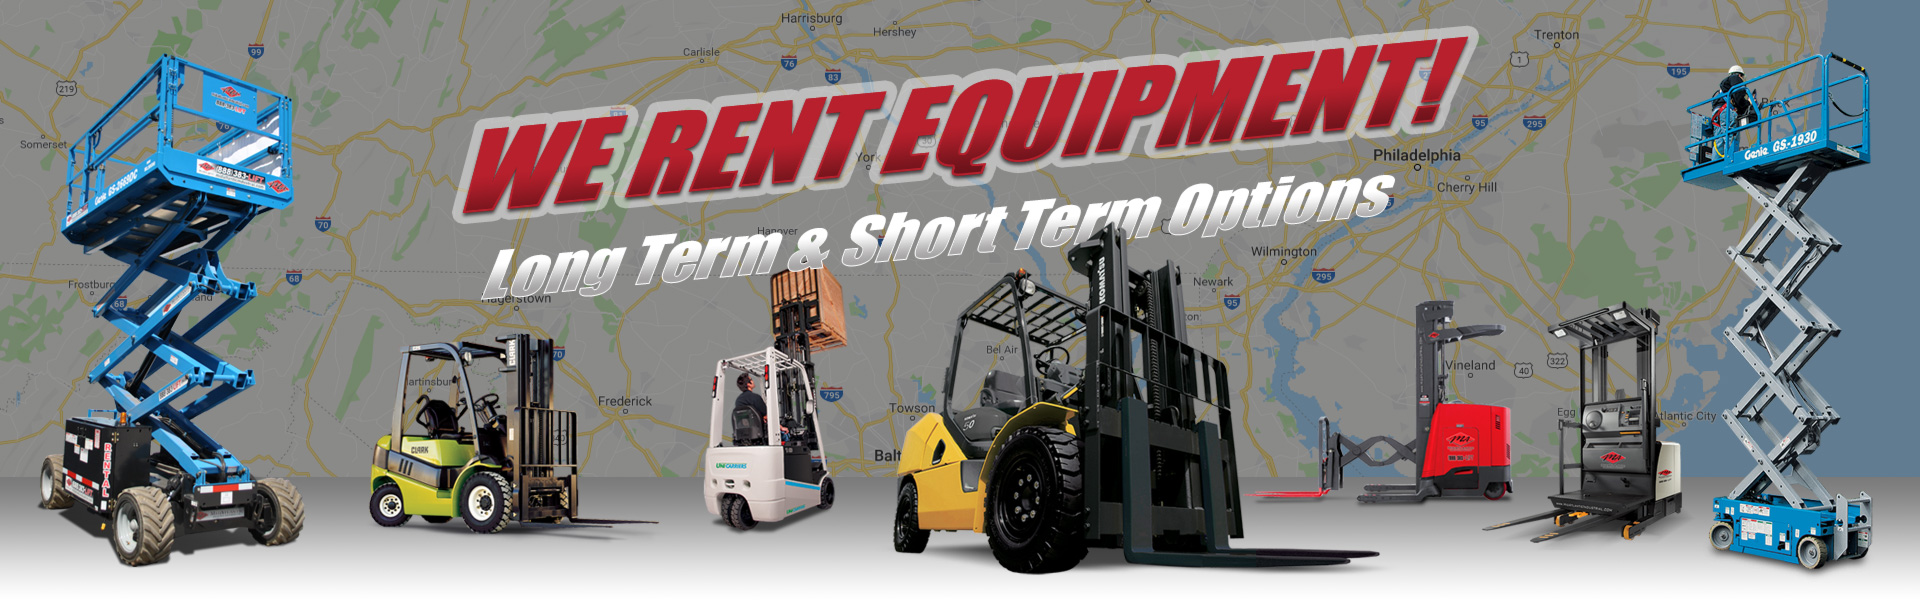 Forklift Rentals Material Handling Equipment Mid Atlantic Industrial